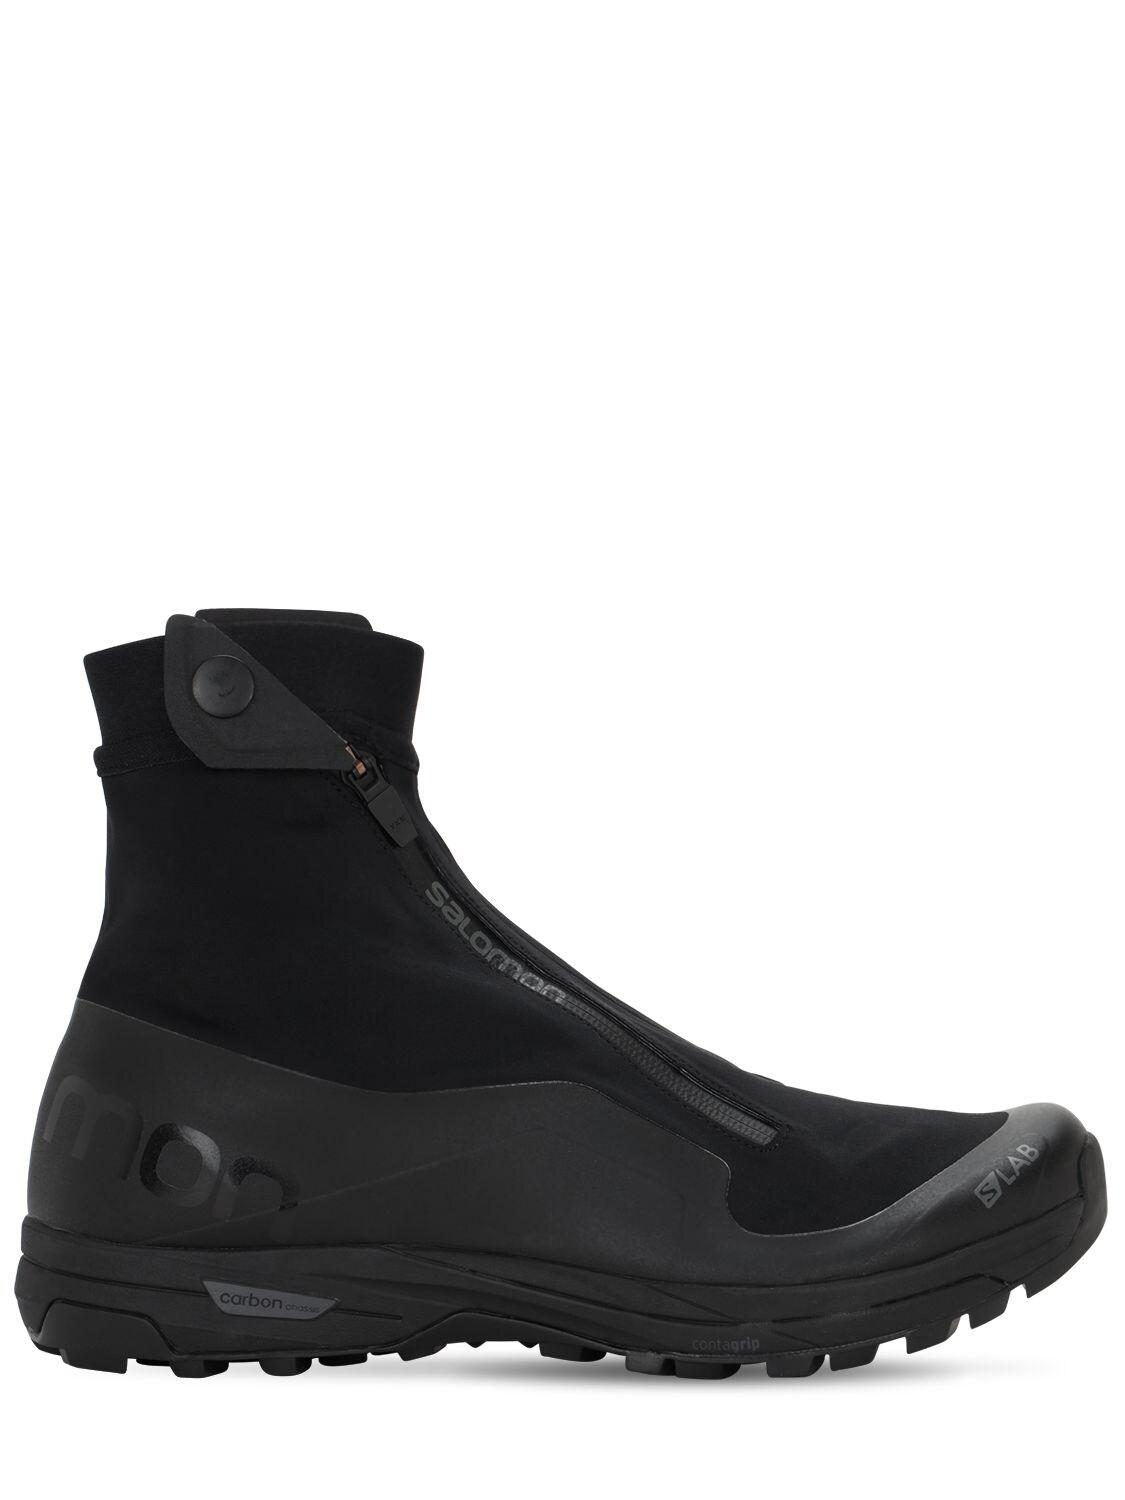 Salomon Black Limited Edition Xa-alpine 2 Adv Sneakers for Men | Lyst